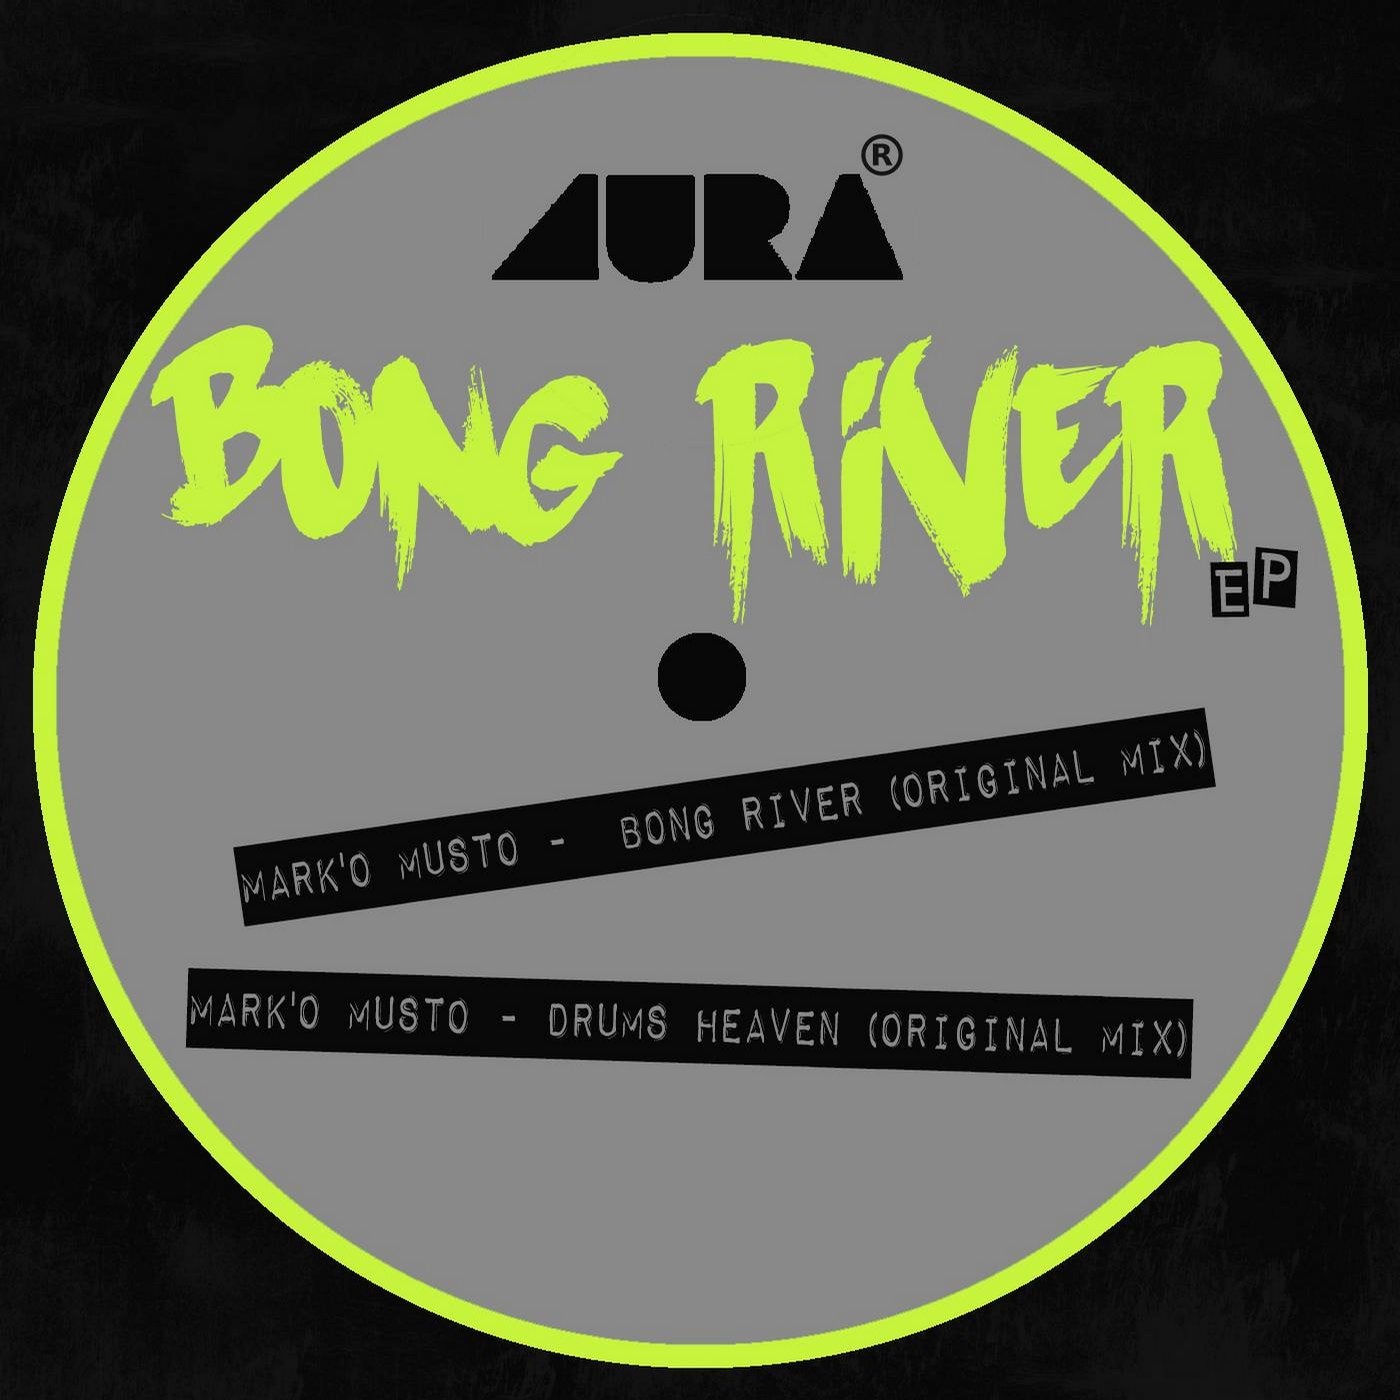 Bong River EP